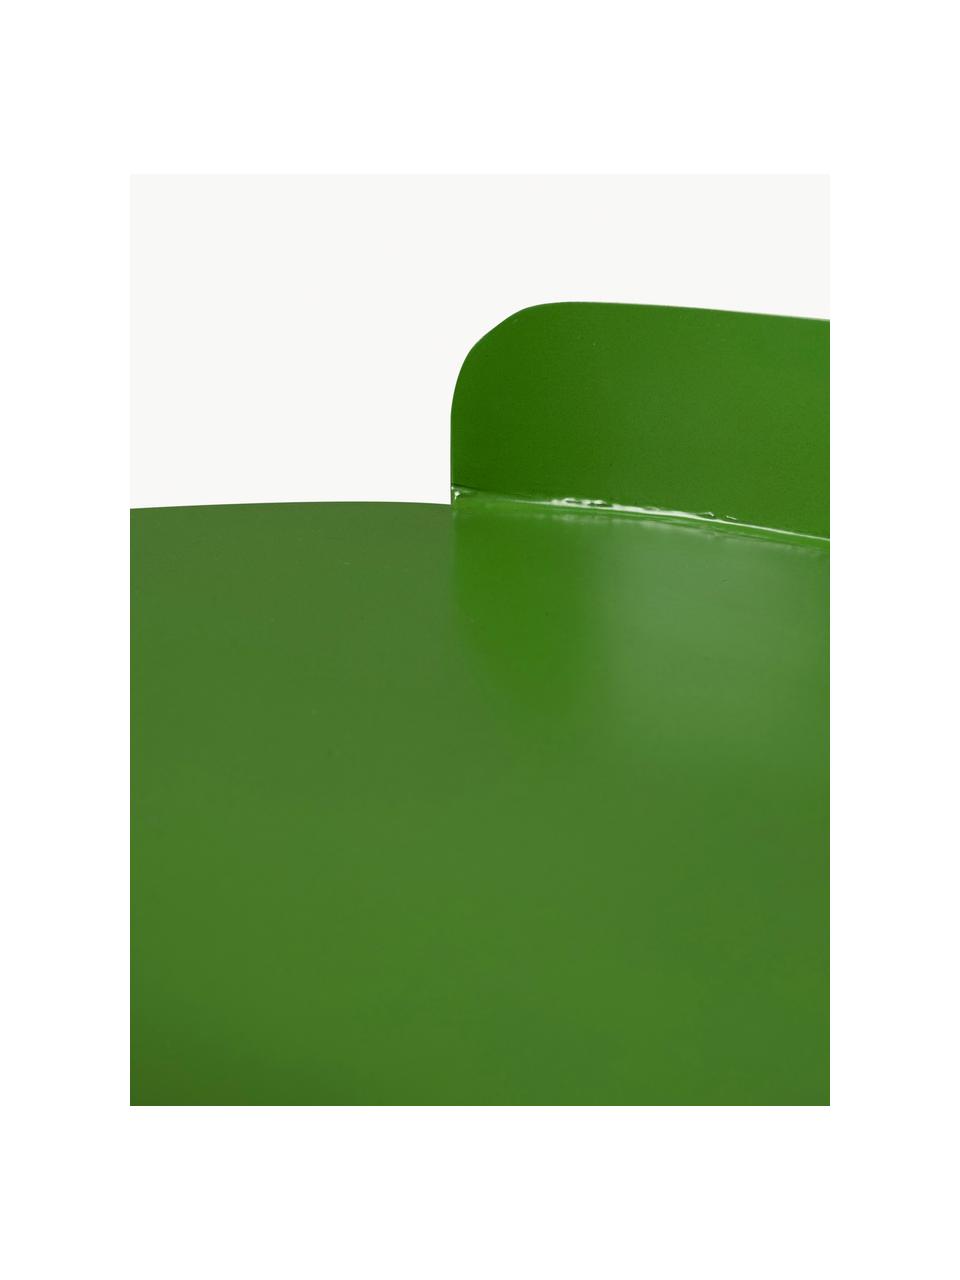 Runder Metall-Beistelltisch Navagio, Metall, beschichtet, Grün, Ø 31 x H 46 cm